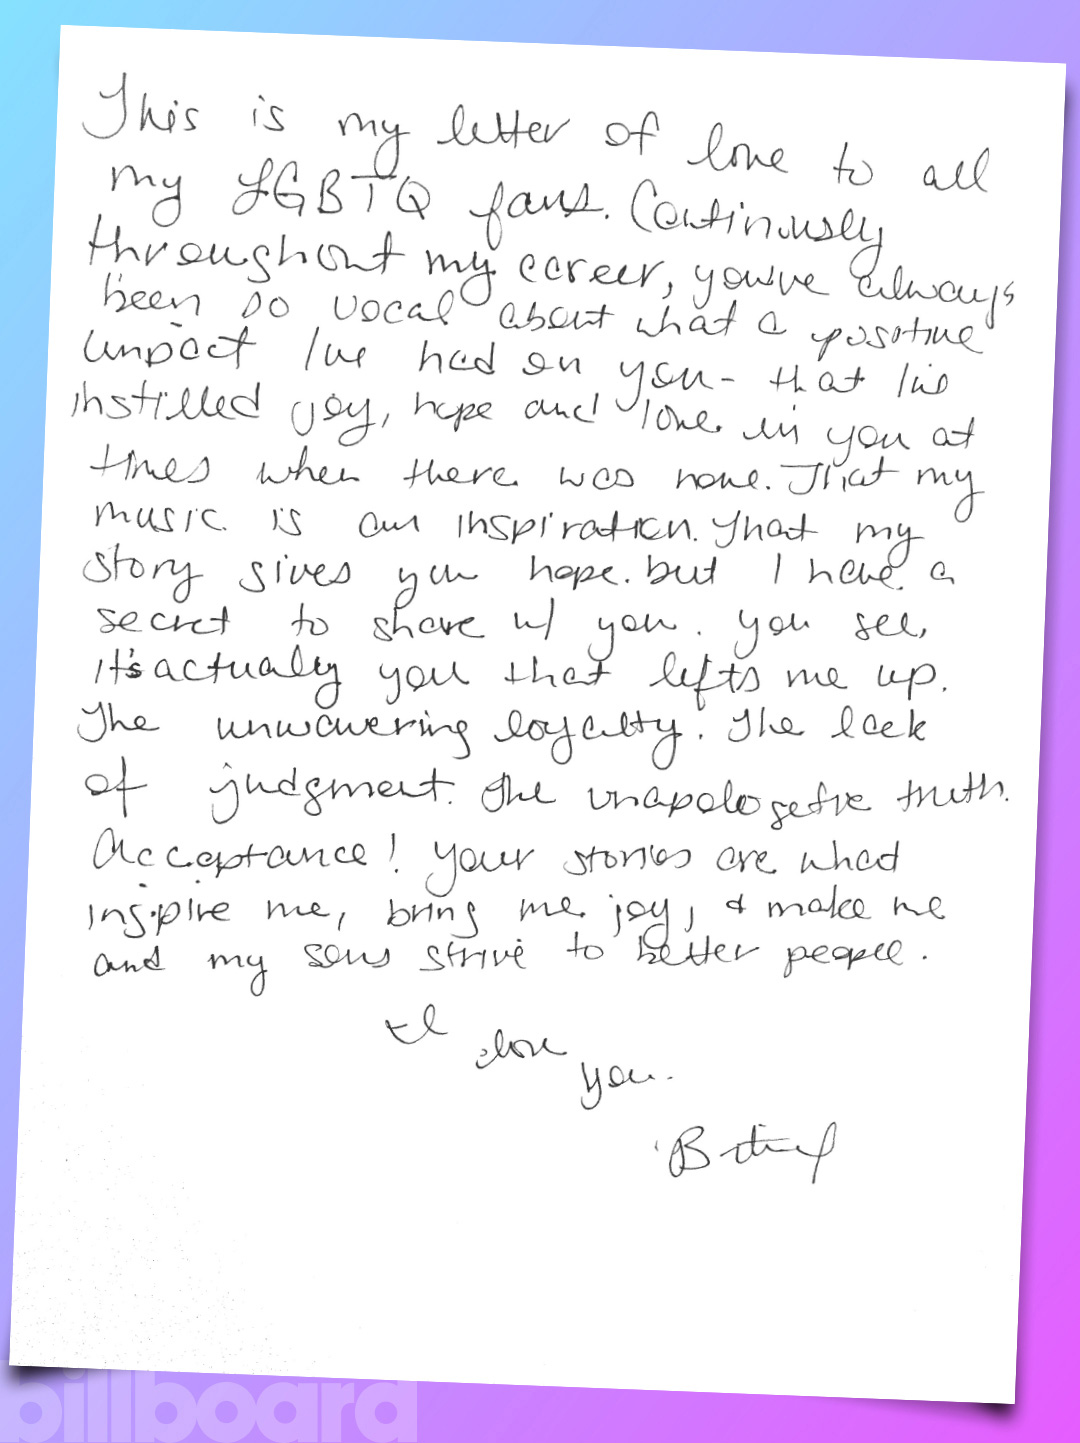 Britney Spears escribe una carta a sus fans LGTB